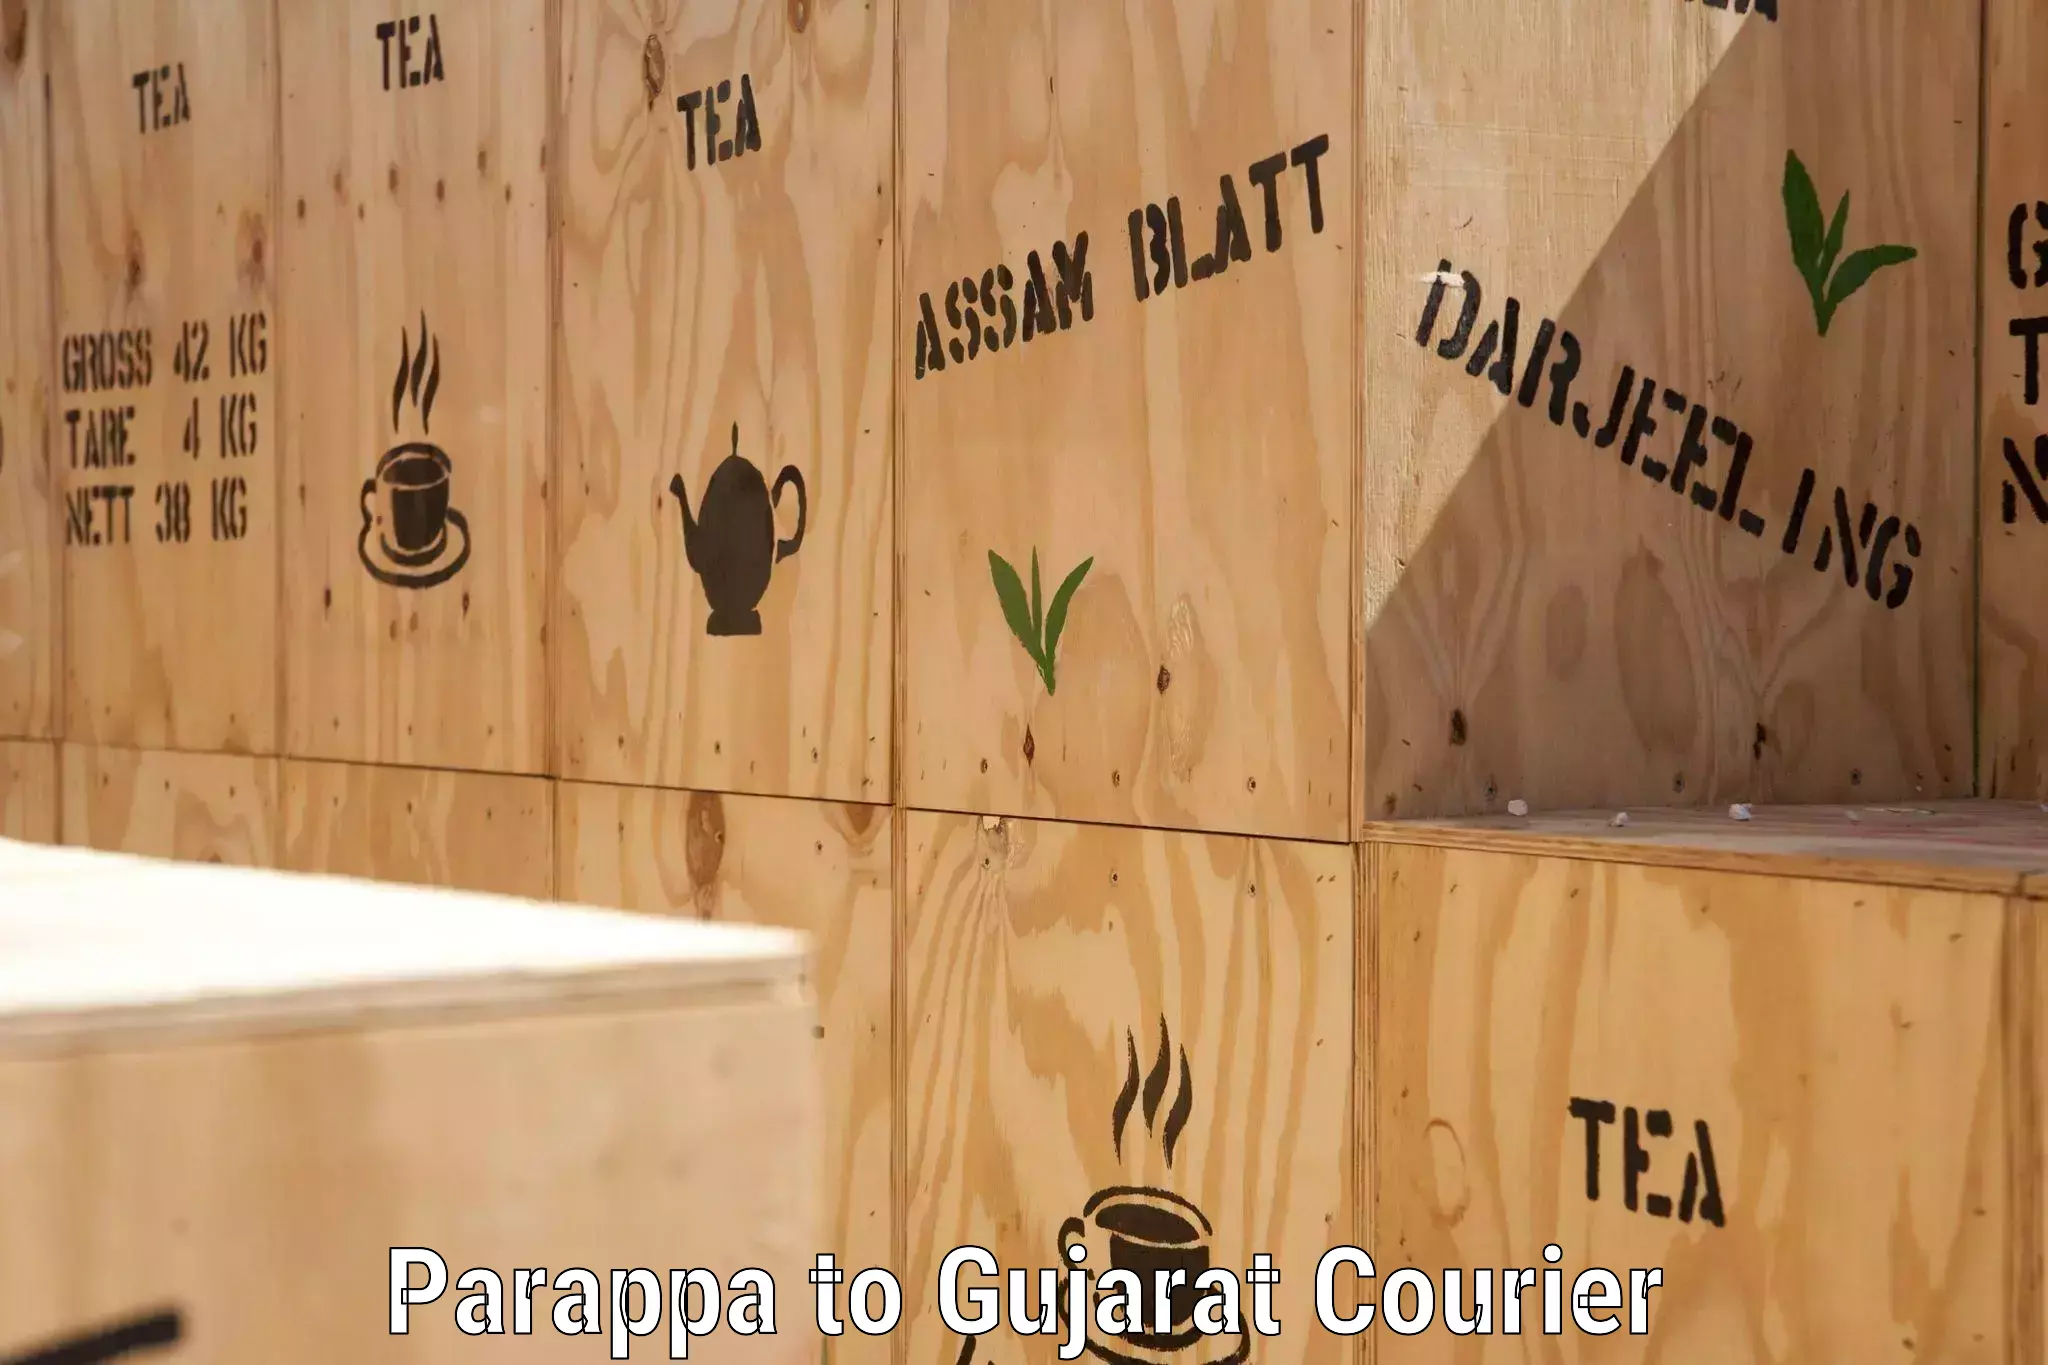 Courier service comparison Parappa to Himmatnagar